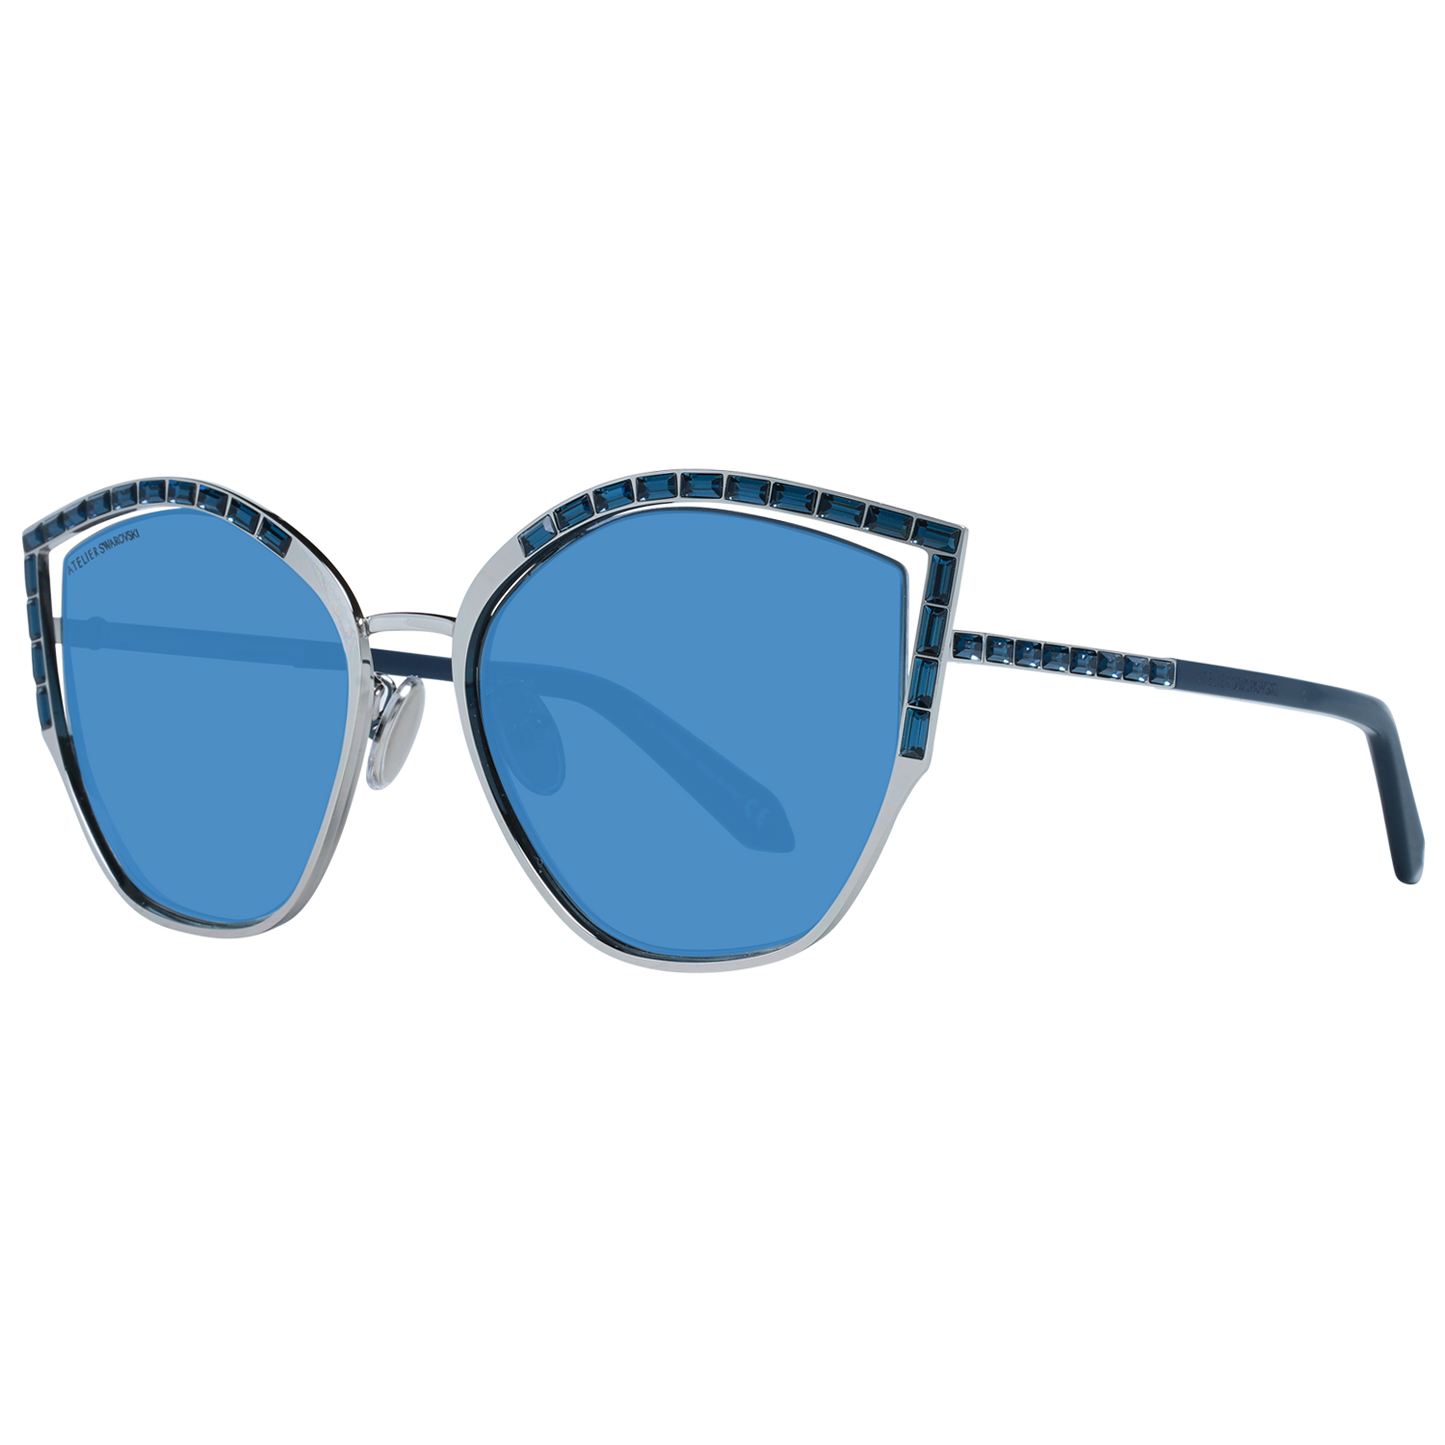 Atelier Swarovski Silver Women Sunglasses - DEA STILOSA MILANO